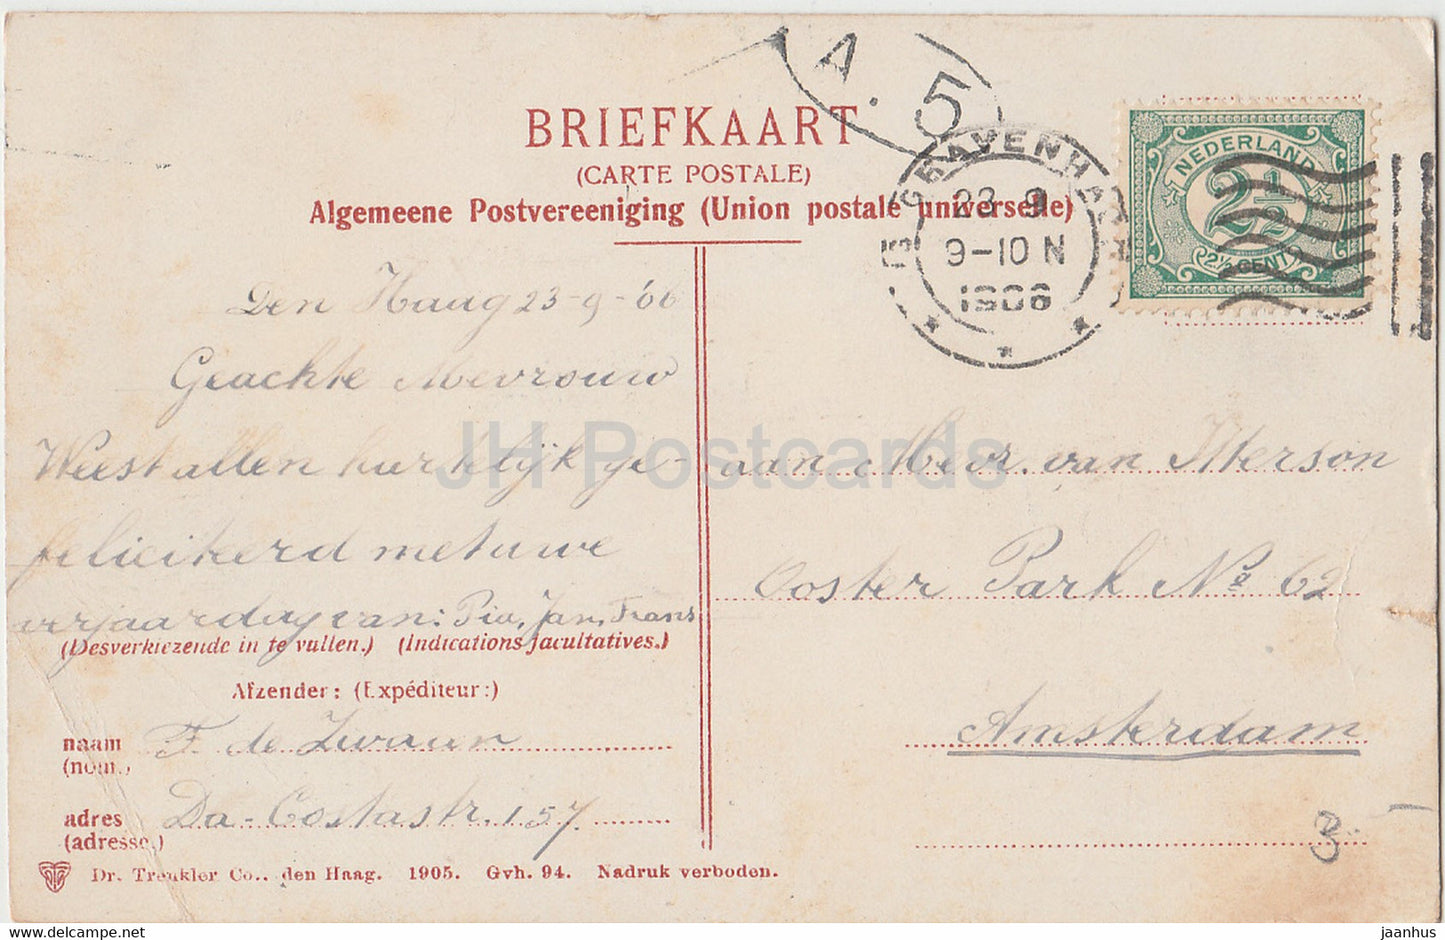 S Gravenhage - Interieur van de Ridderzaal - 2320 - alte Postkarte - 1906 - Niederlande - gebraucht